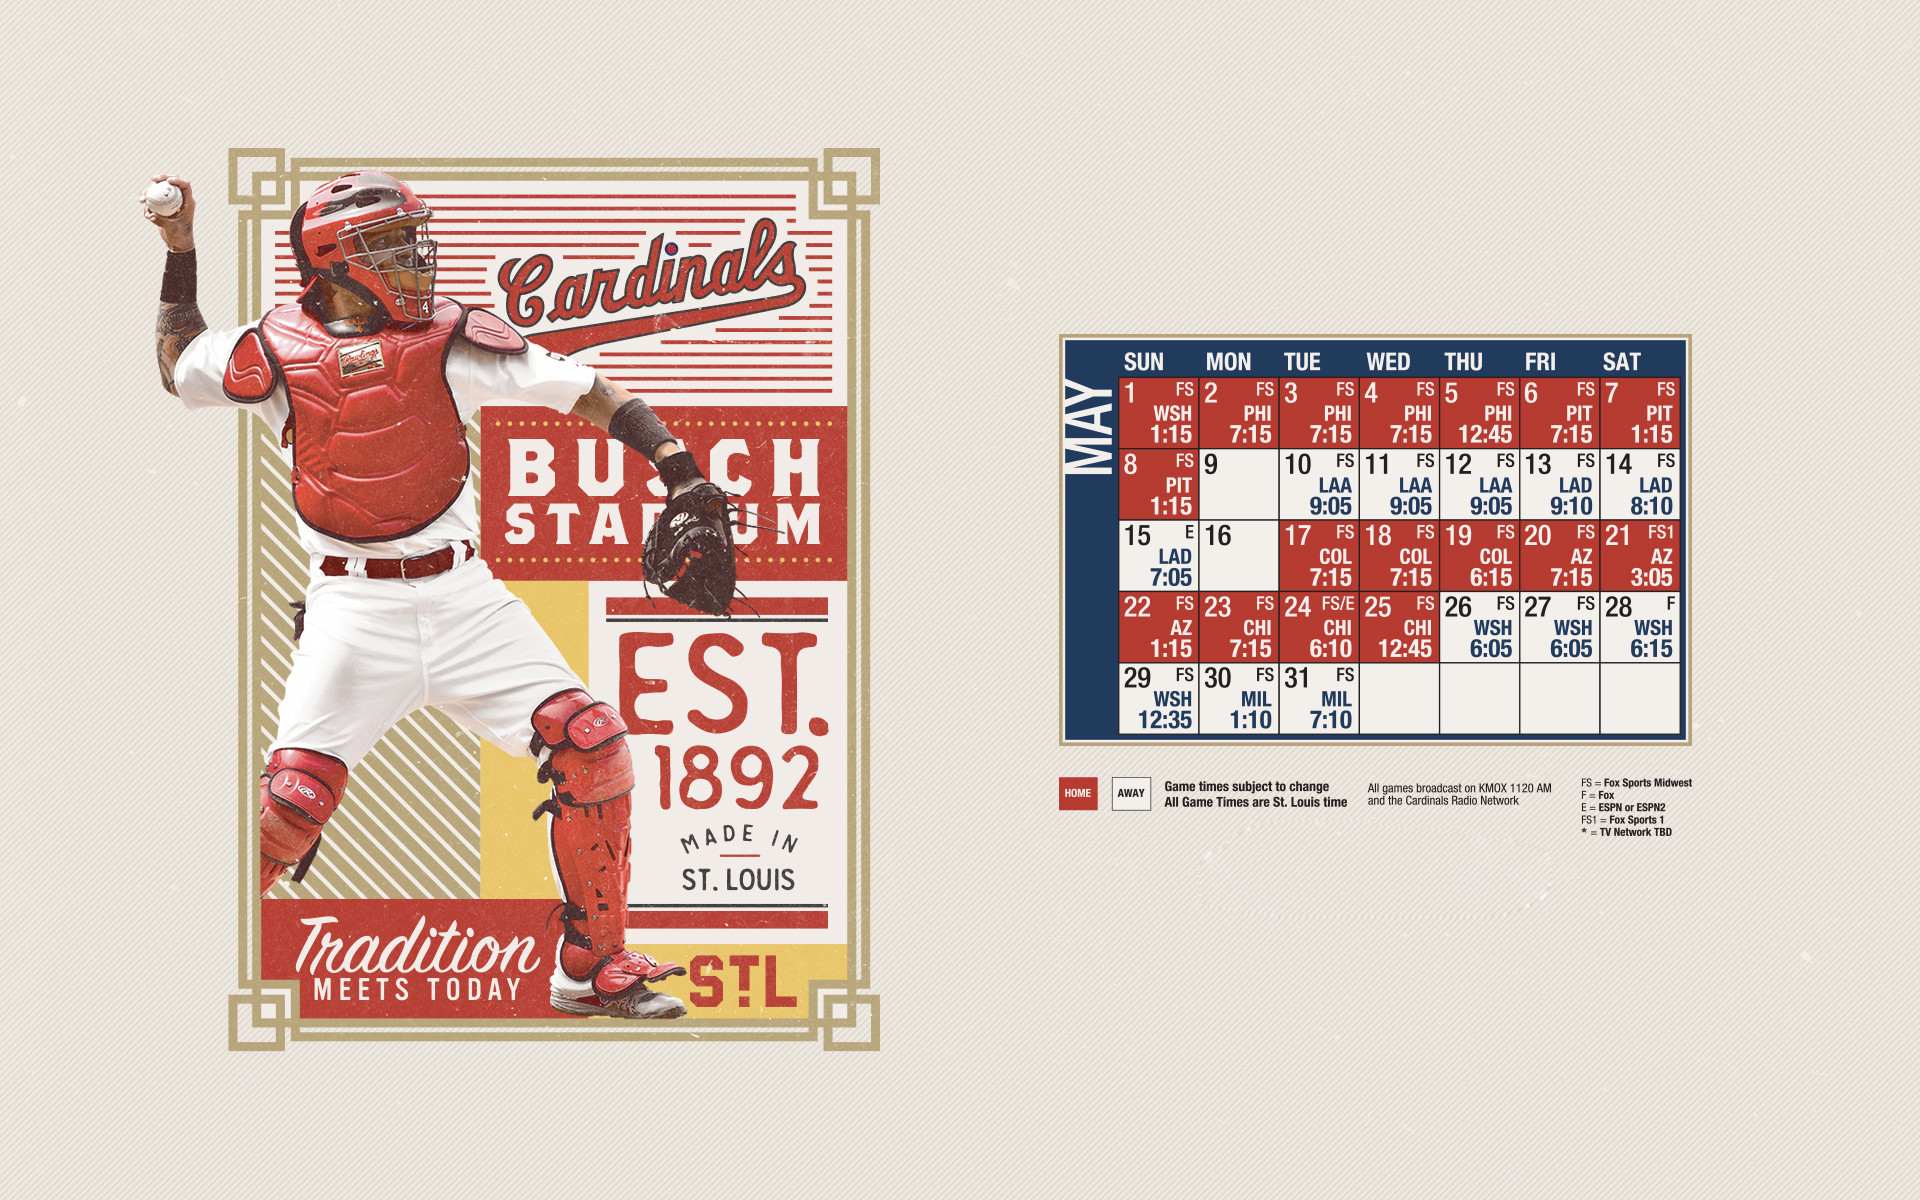 St. Louis Cardinals Wallpaper Schedule for your lock screen